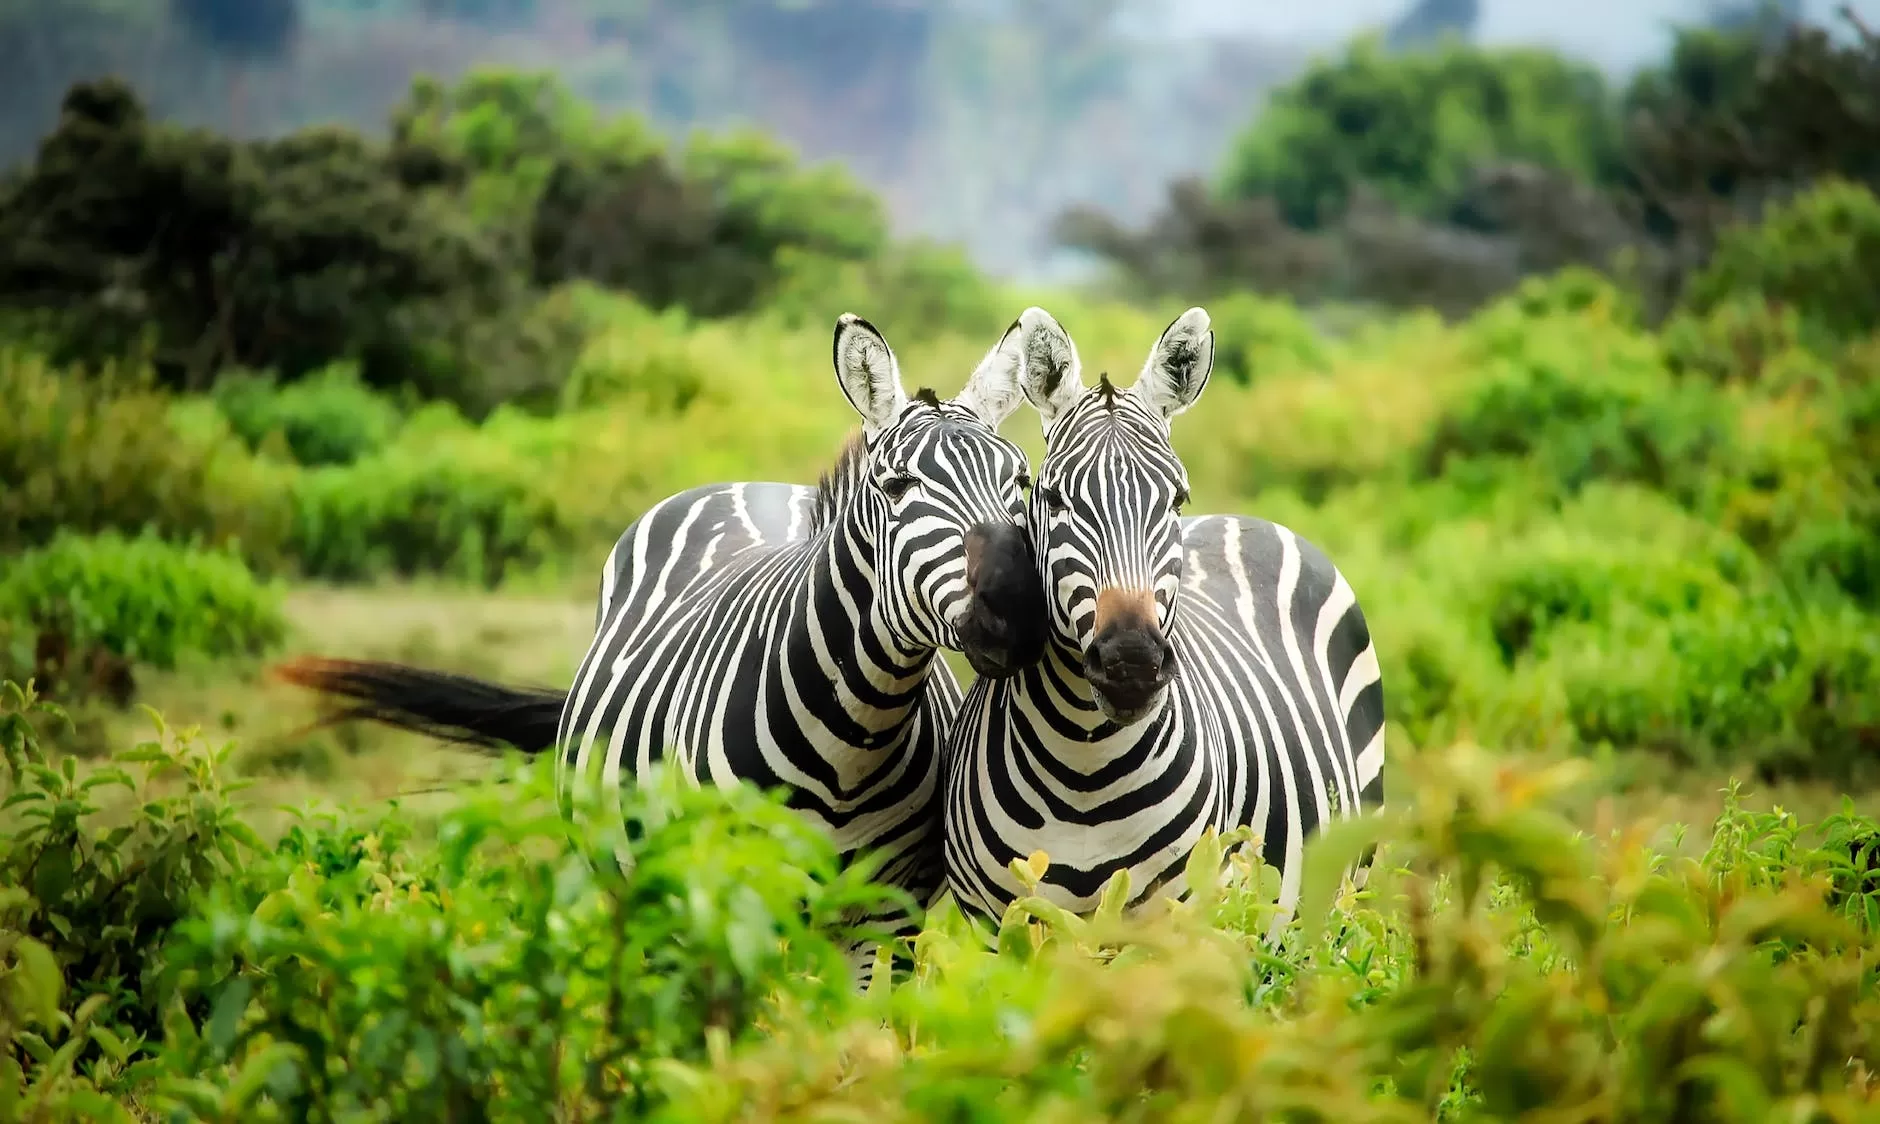 zebras on zebra adventure travel theme